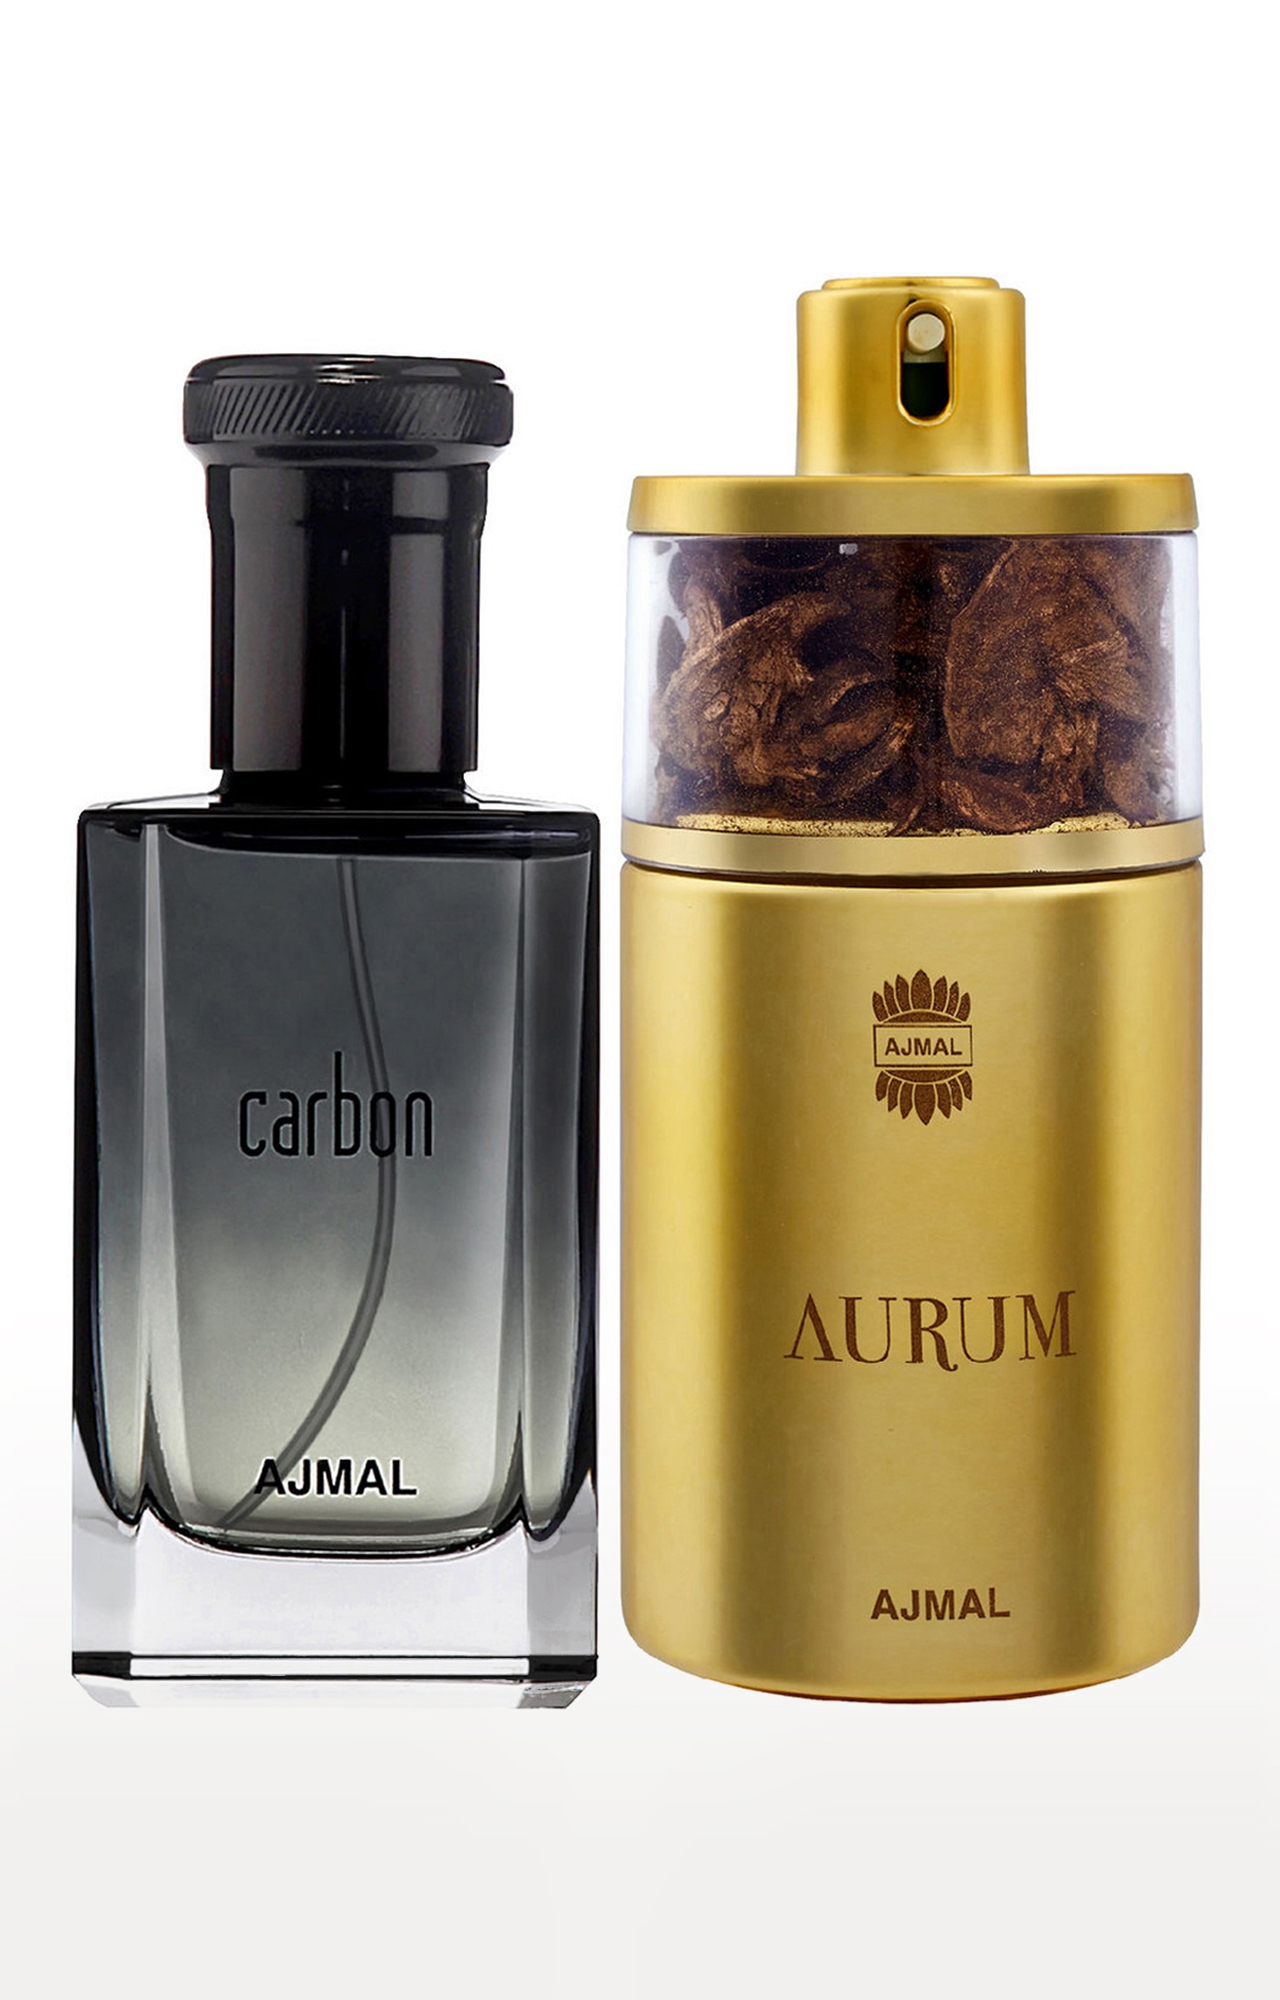 Ajmal Carbon EDP Perfume 100ml for Men and Aurum EDP Fruity Perfume 75ml for Women